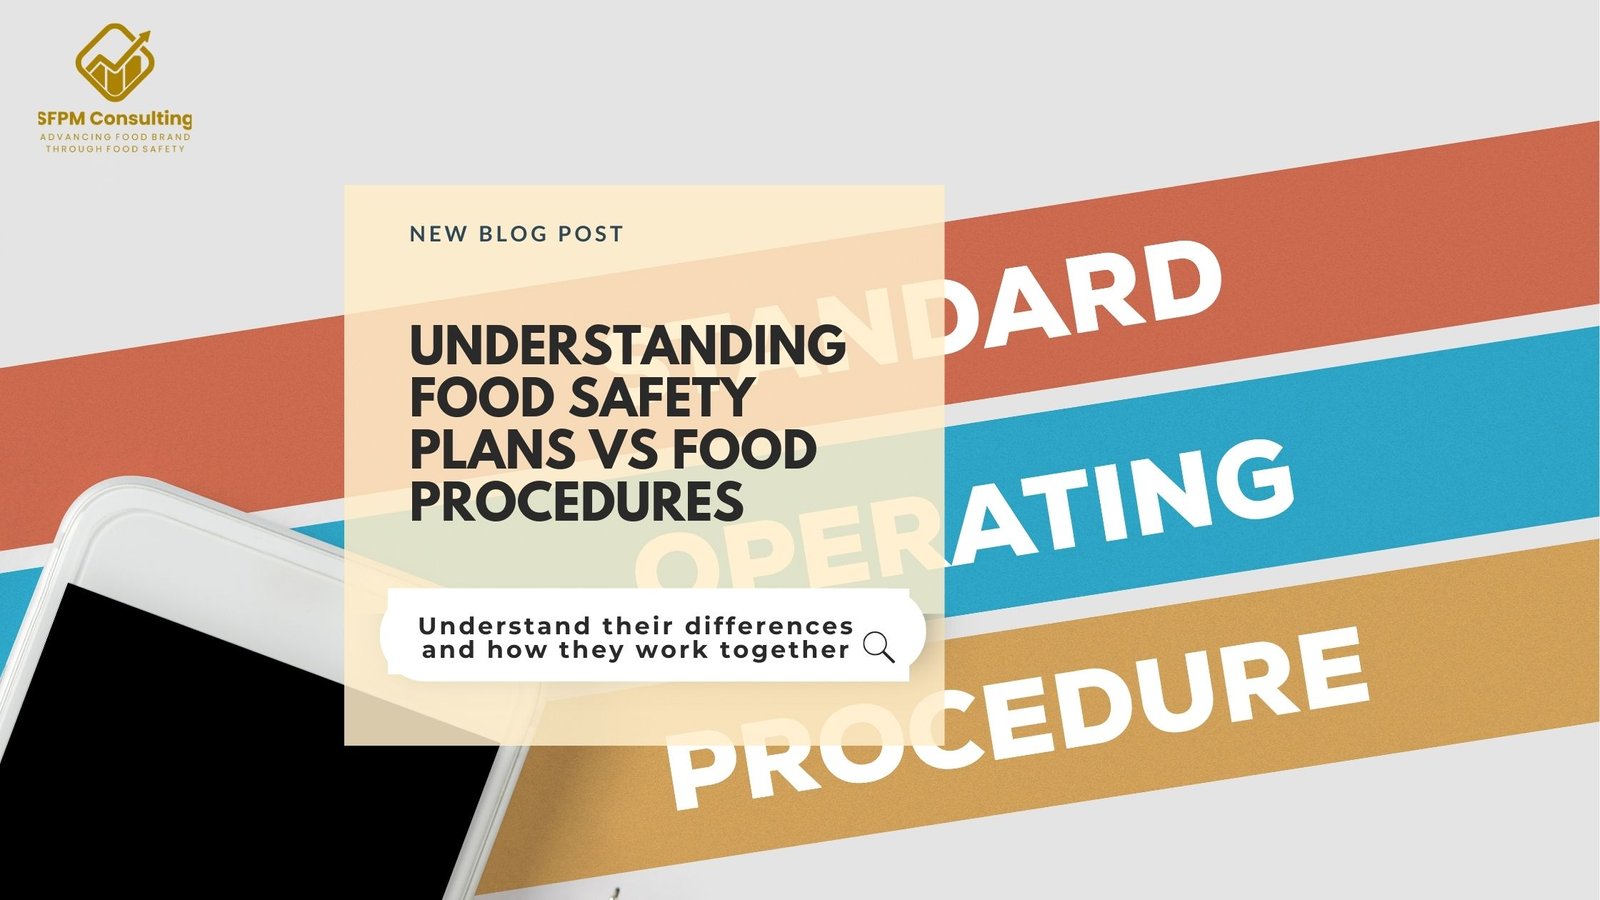 SFPM Consulting present Understanding Food Safety Plans vs Food Procedures